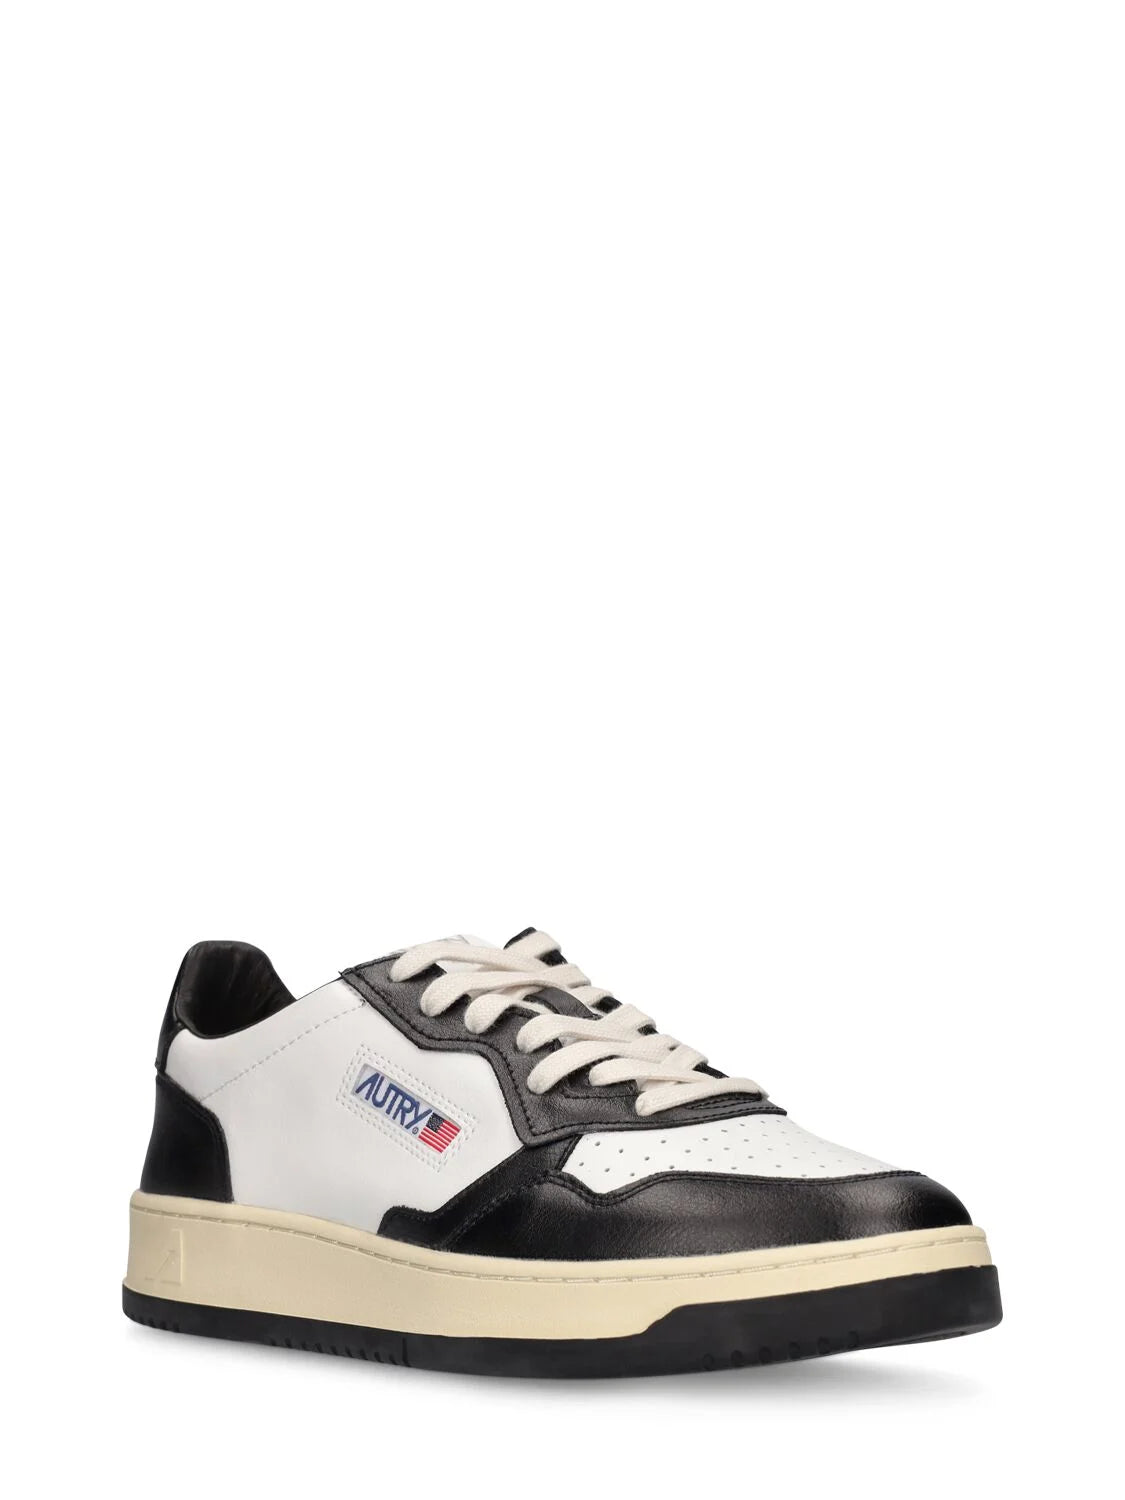 Autry sneakers bicolore bianco nero  AULM WB01